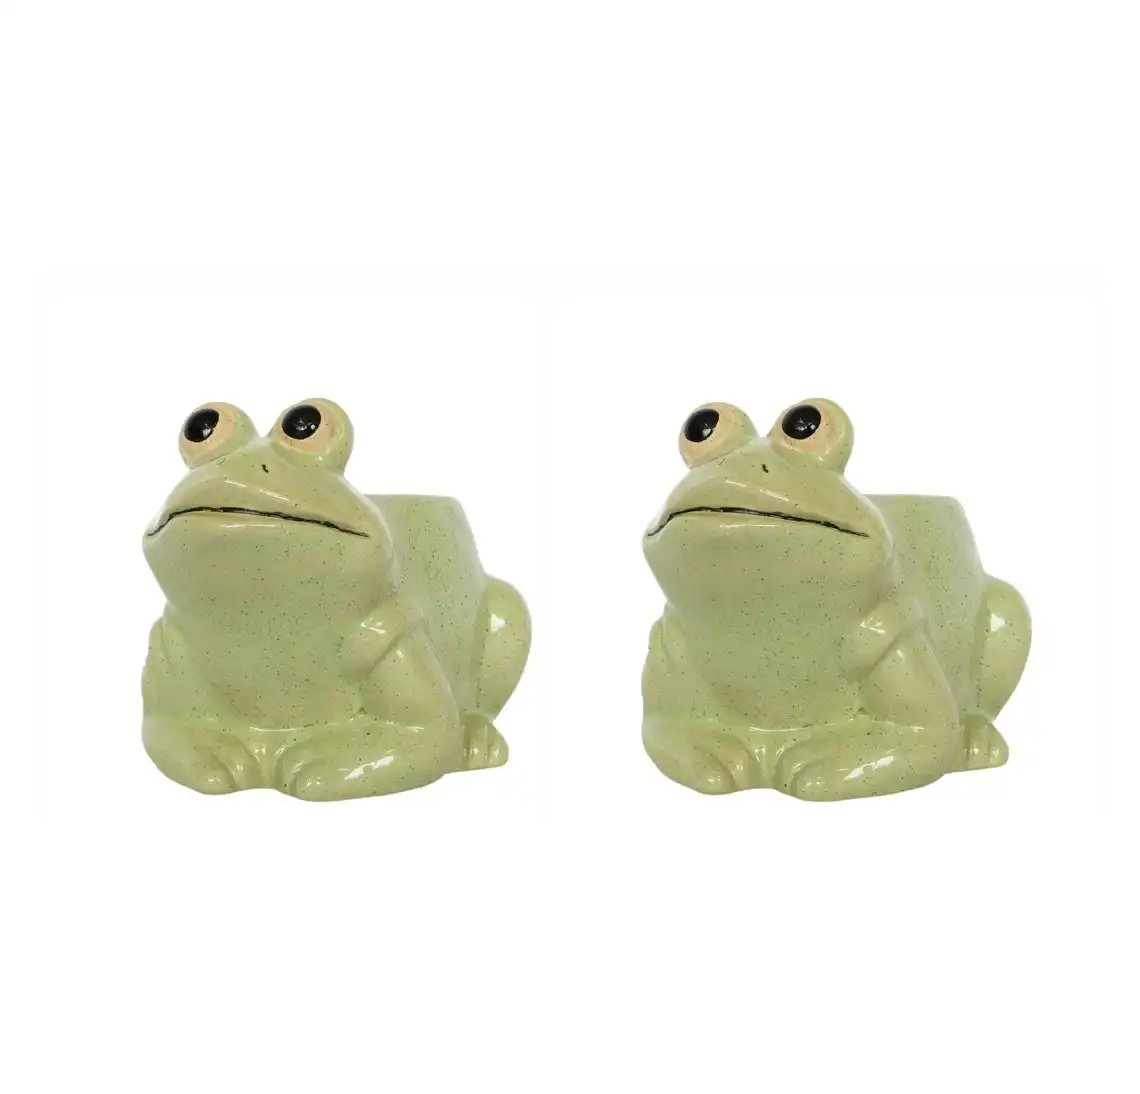 2x Urban Frog 9cm Ceramic Planter Garden Ornament Display Pot Small Light GRN